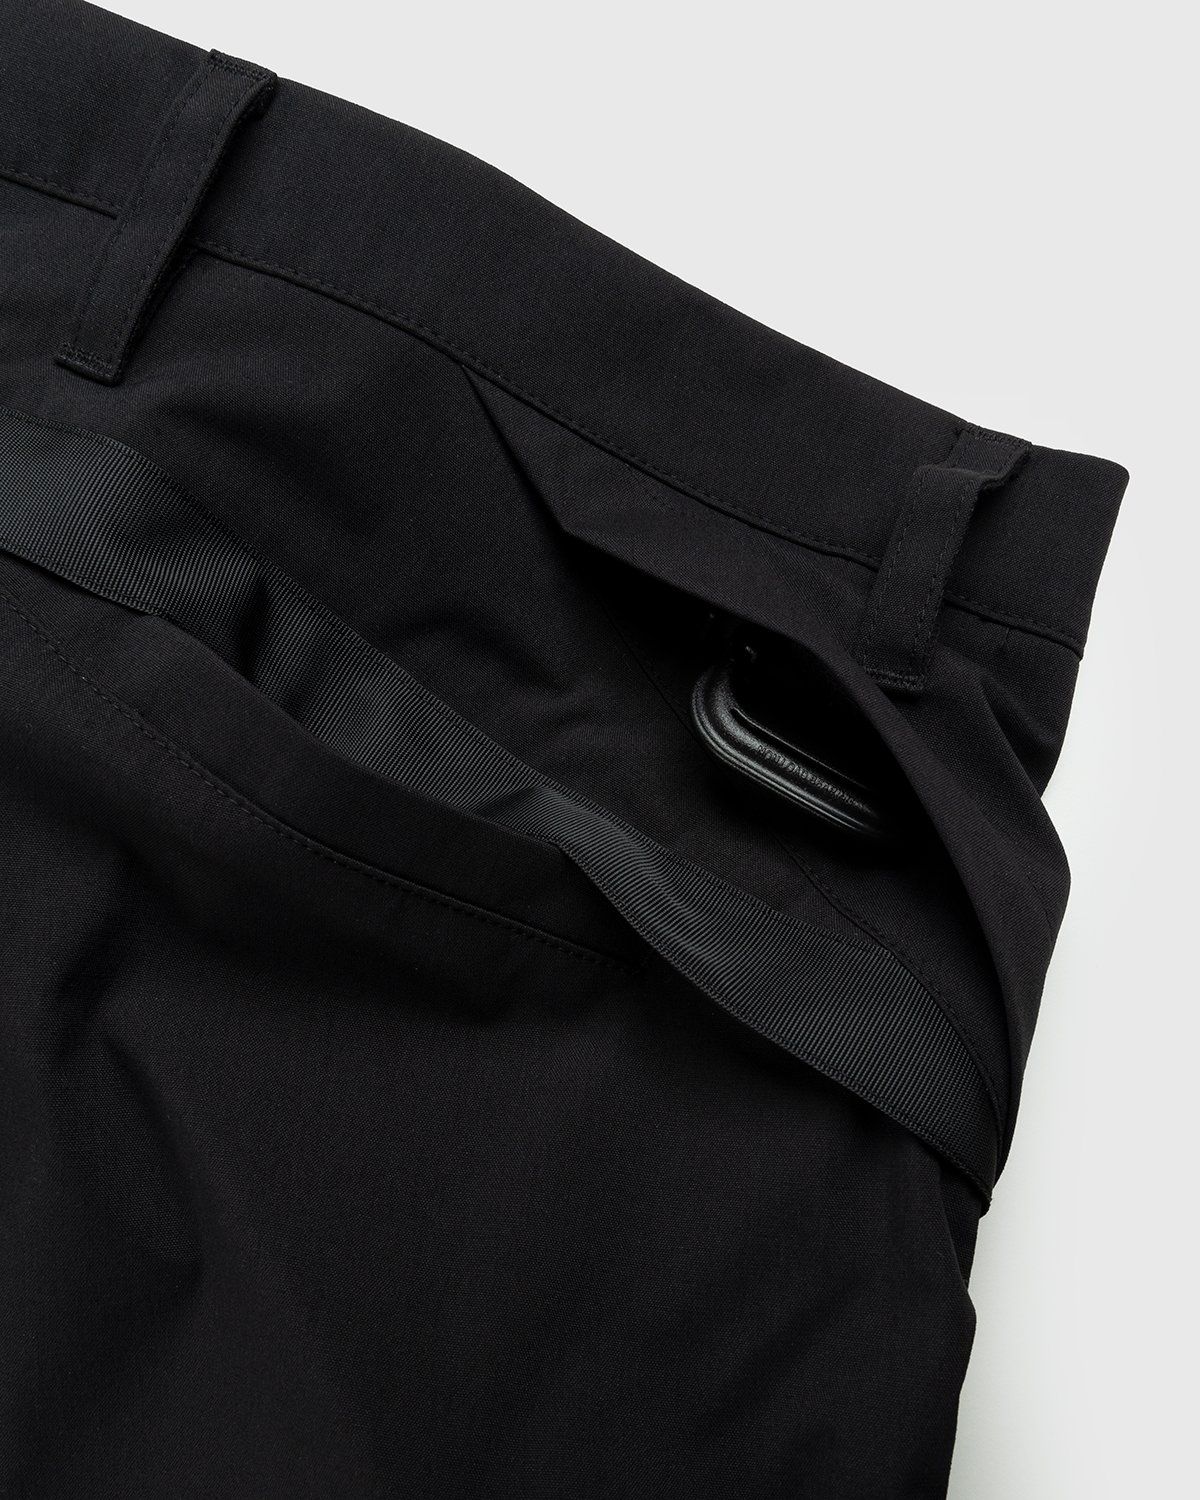 ACRONYM – P10A-E Cargo Pants Black - Cargo Pants - Black - Image 6